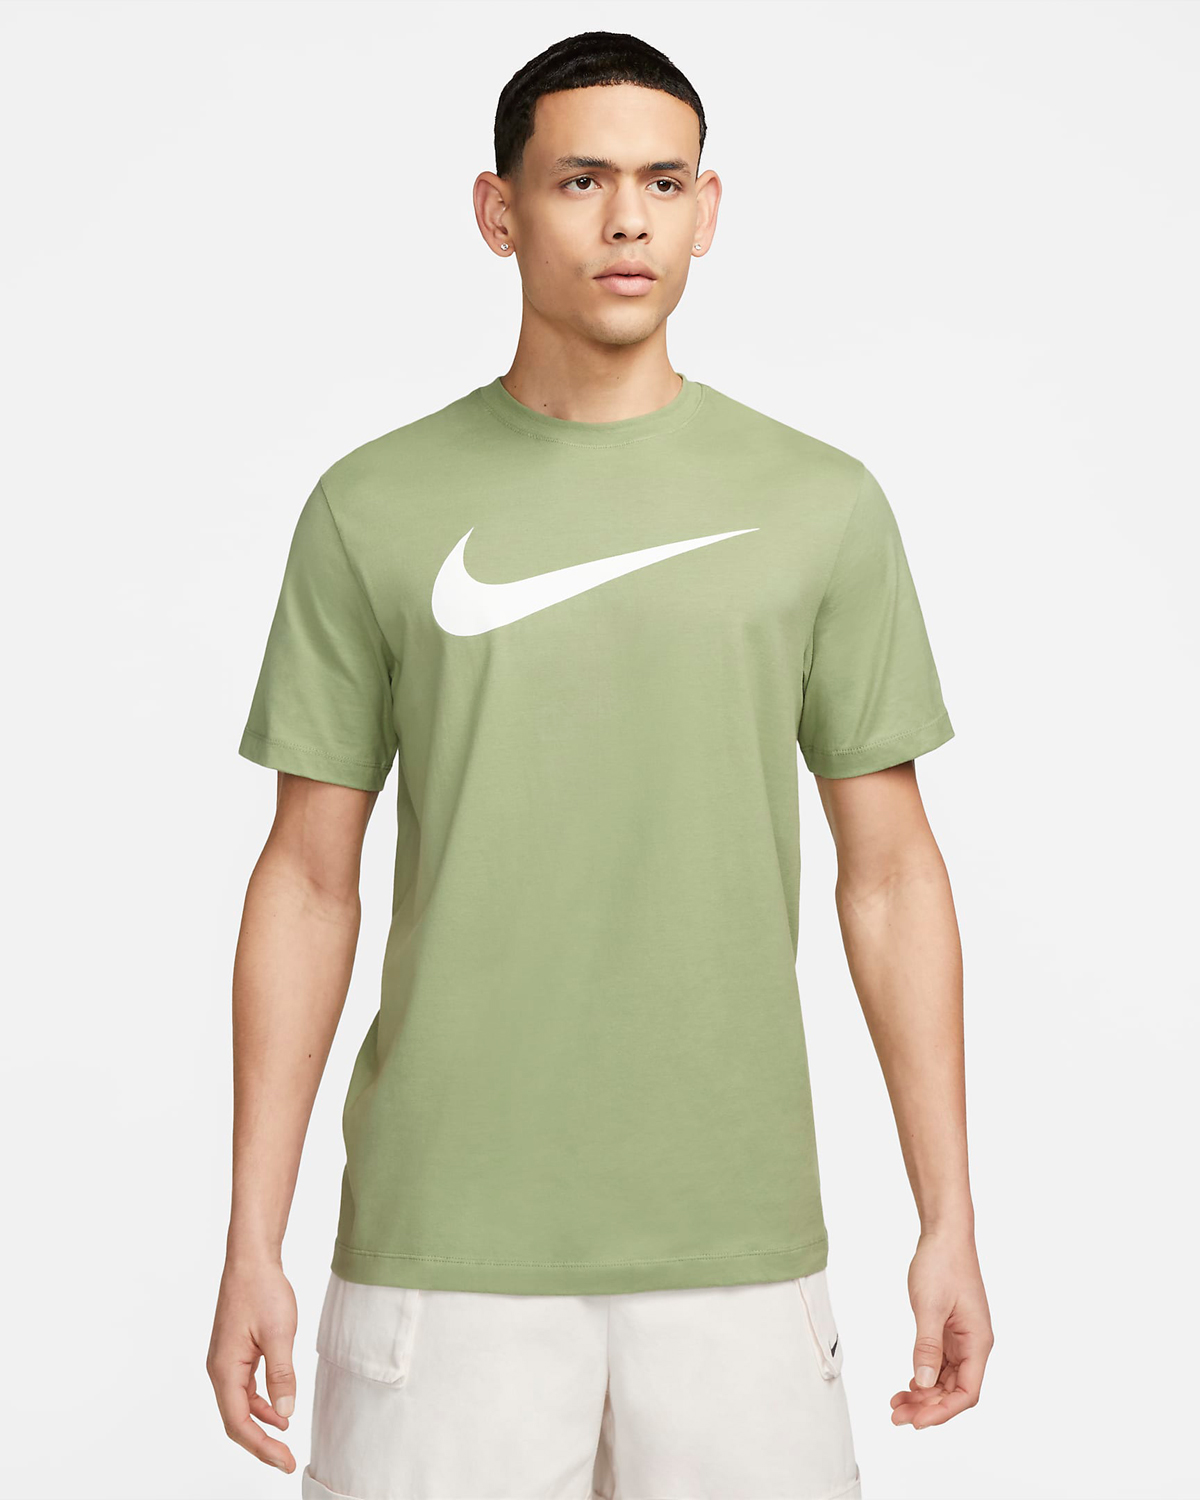 Nike-Sportswear-Swoosh-T-Shirt-Oil-Green